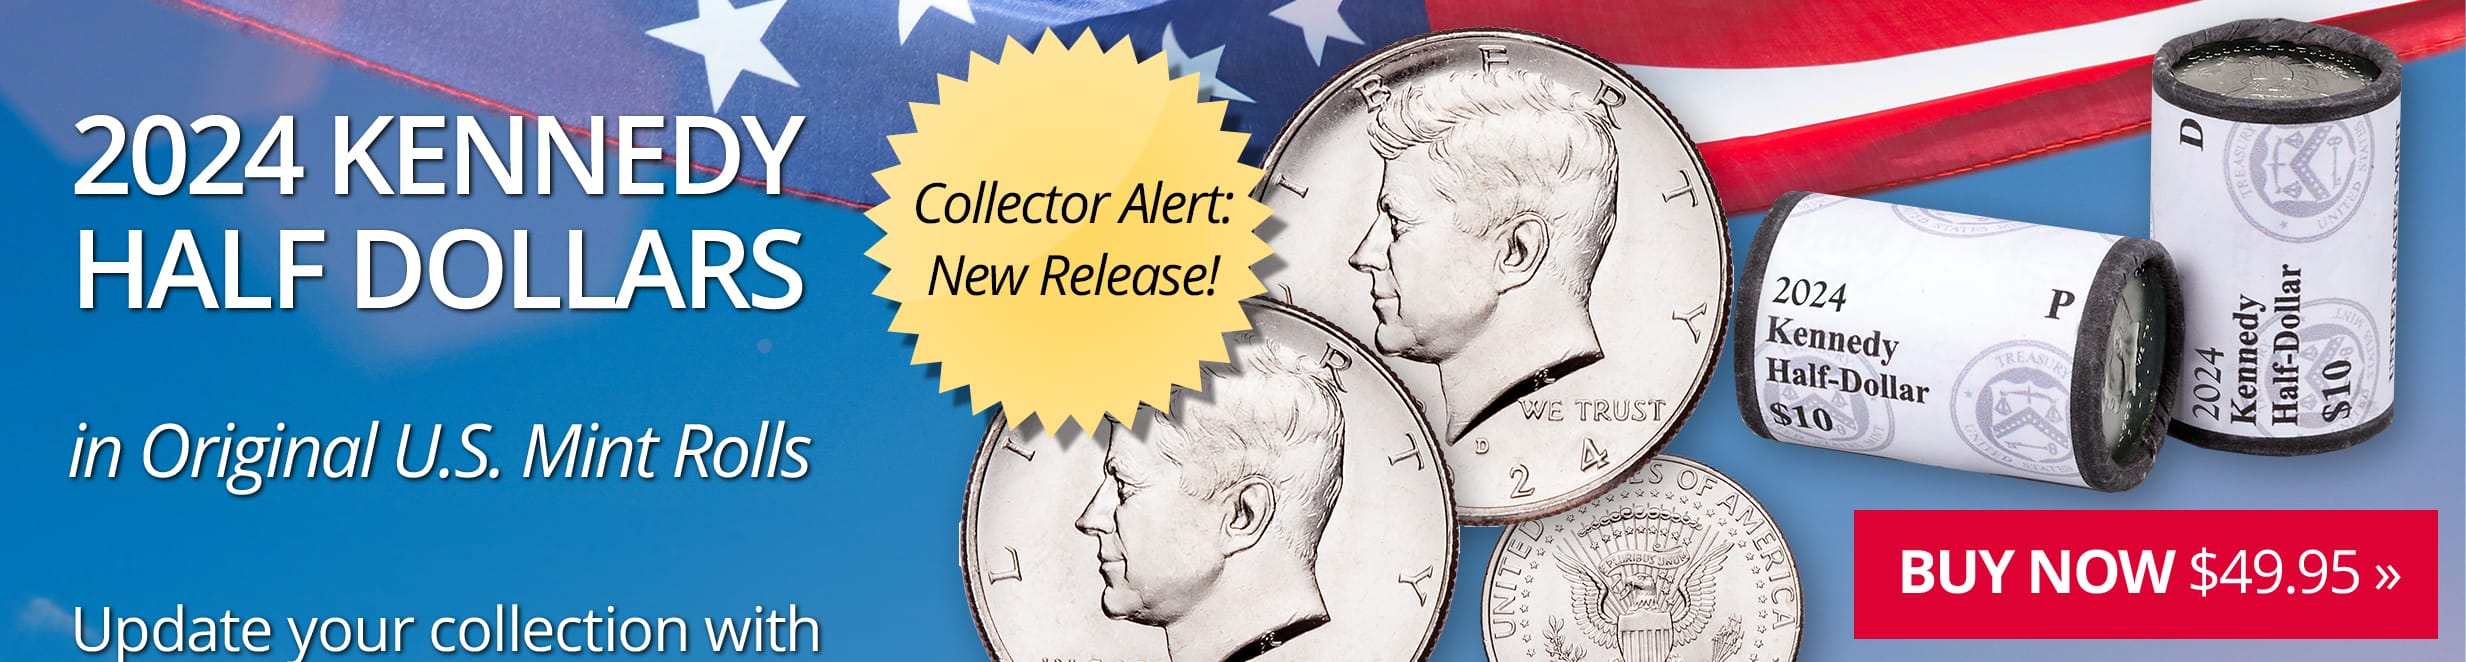 2024 Kennedy Half Dollars in Original U.S. Mint Rolls